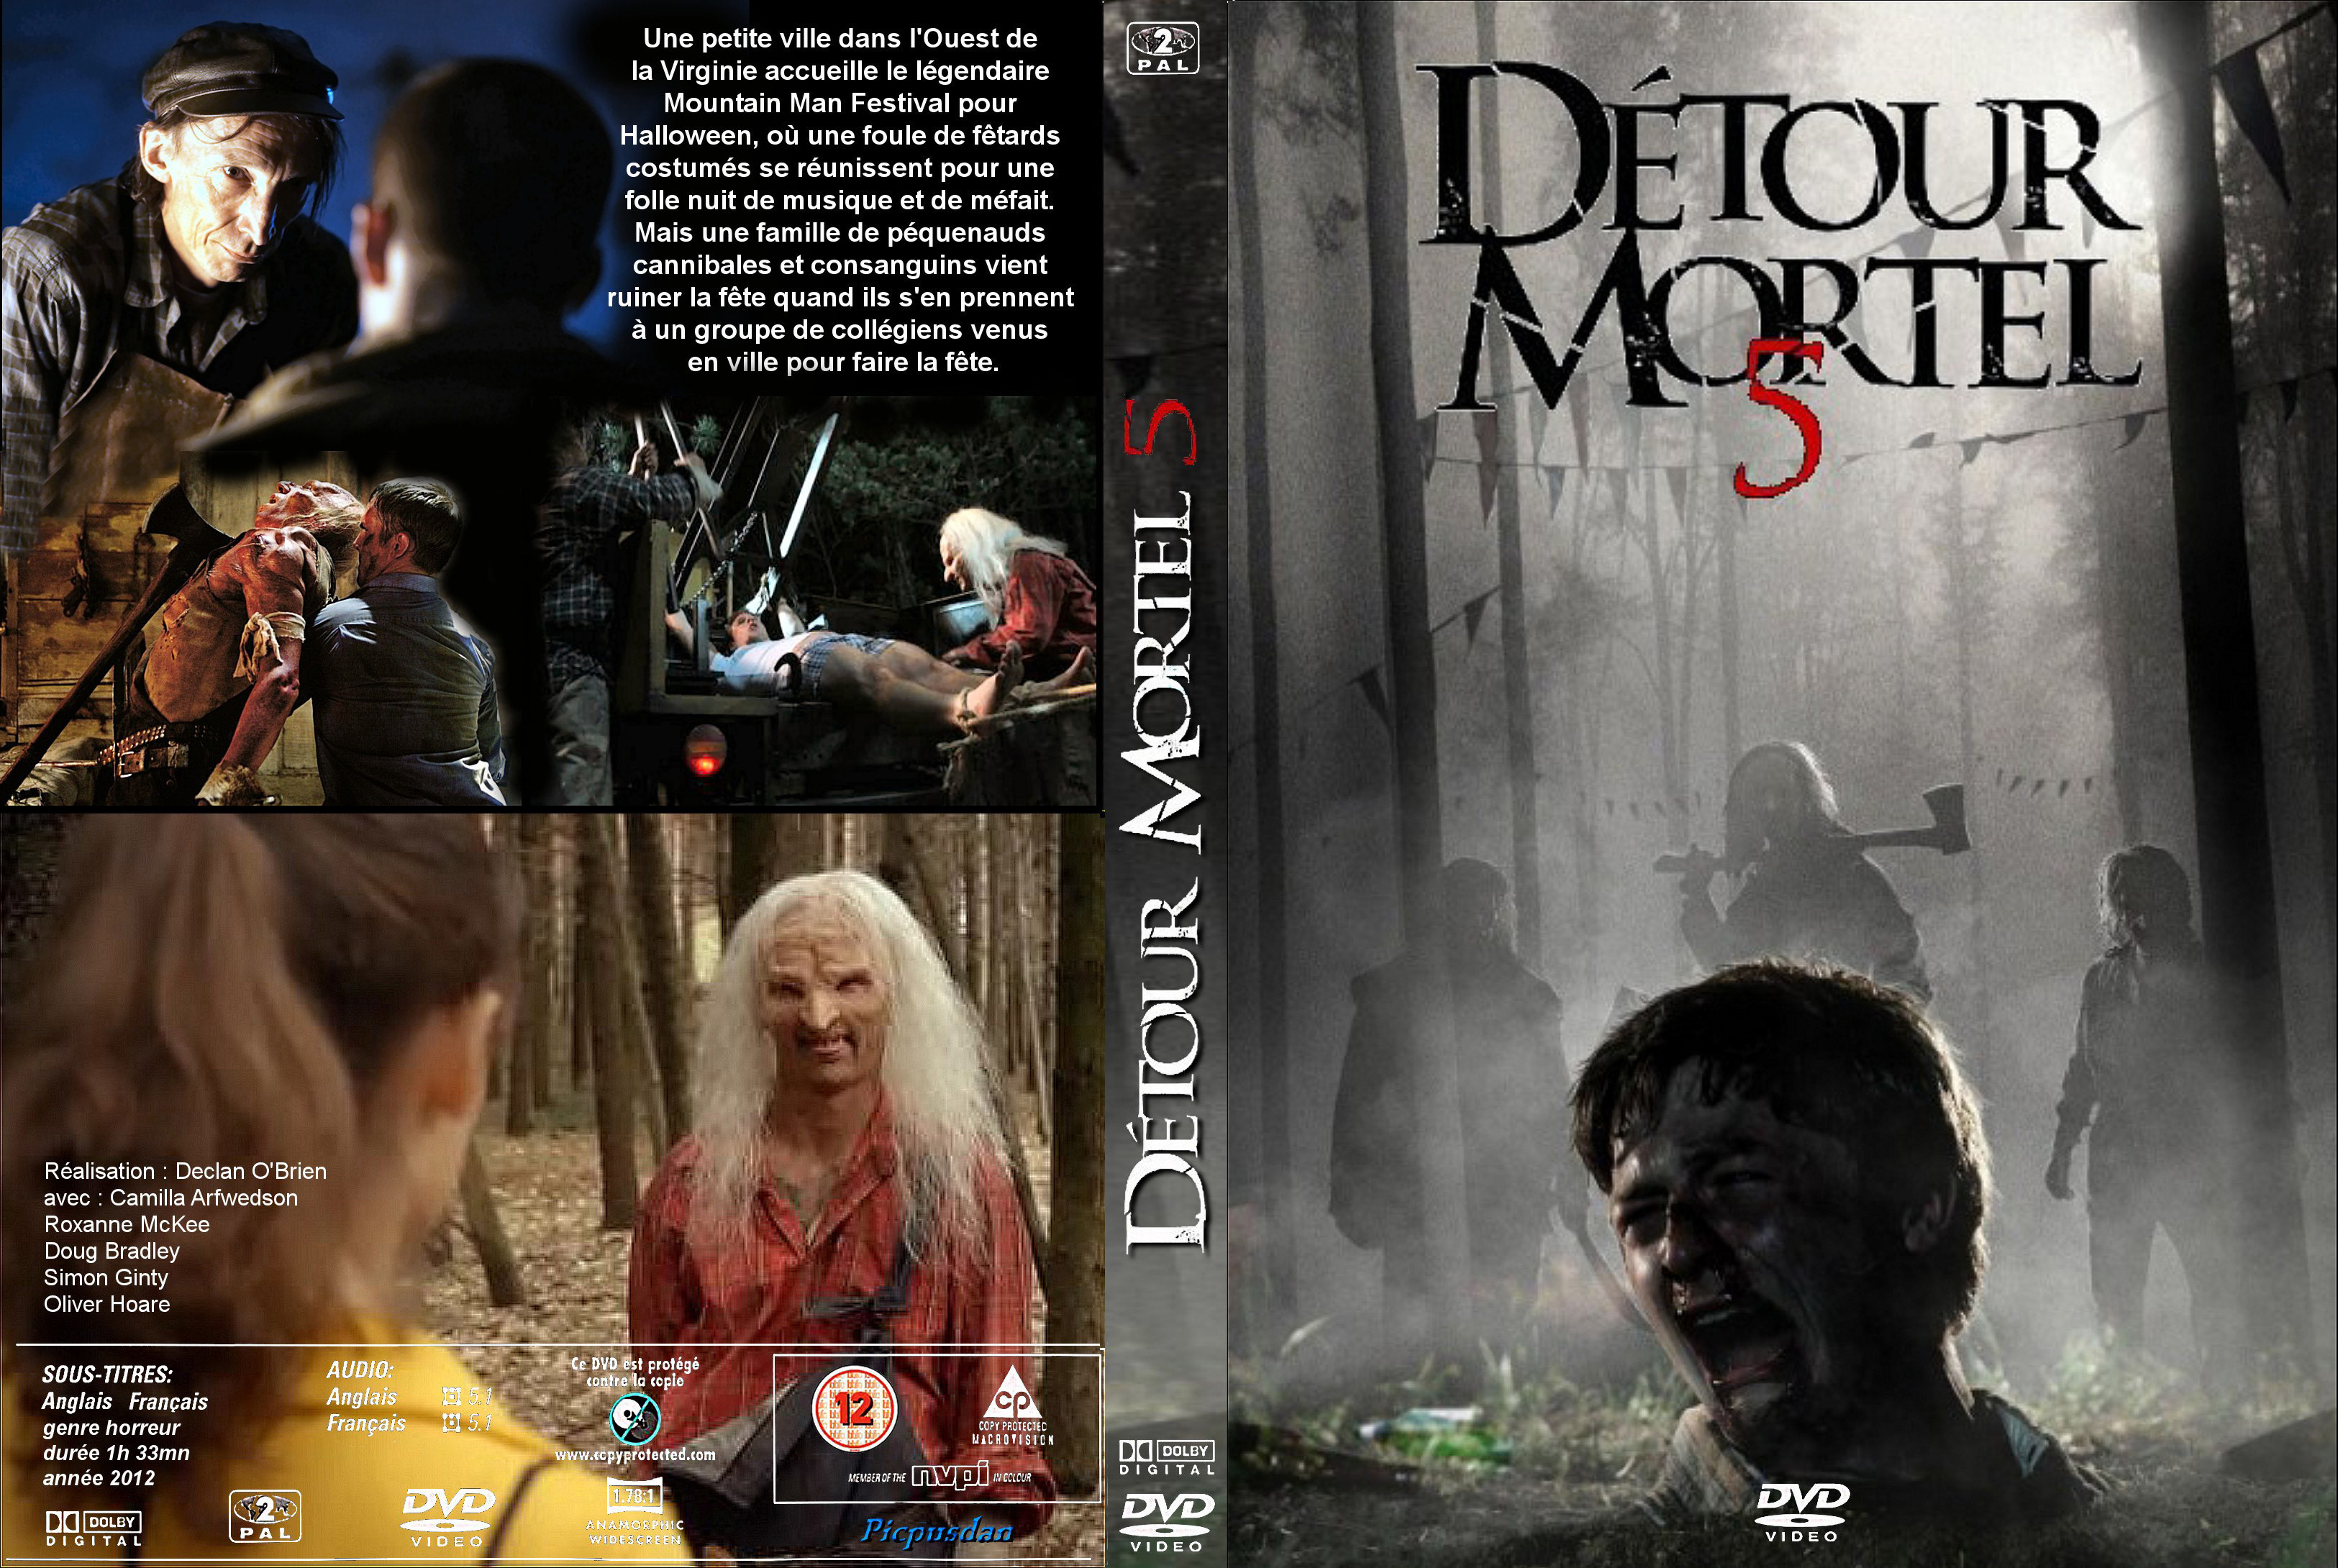 Jaquette DVD Dtour mortel 5 custom